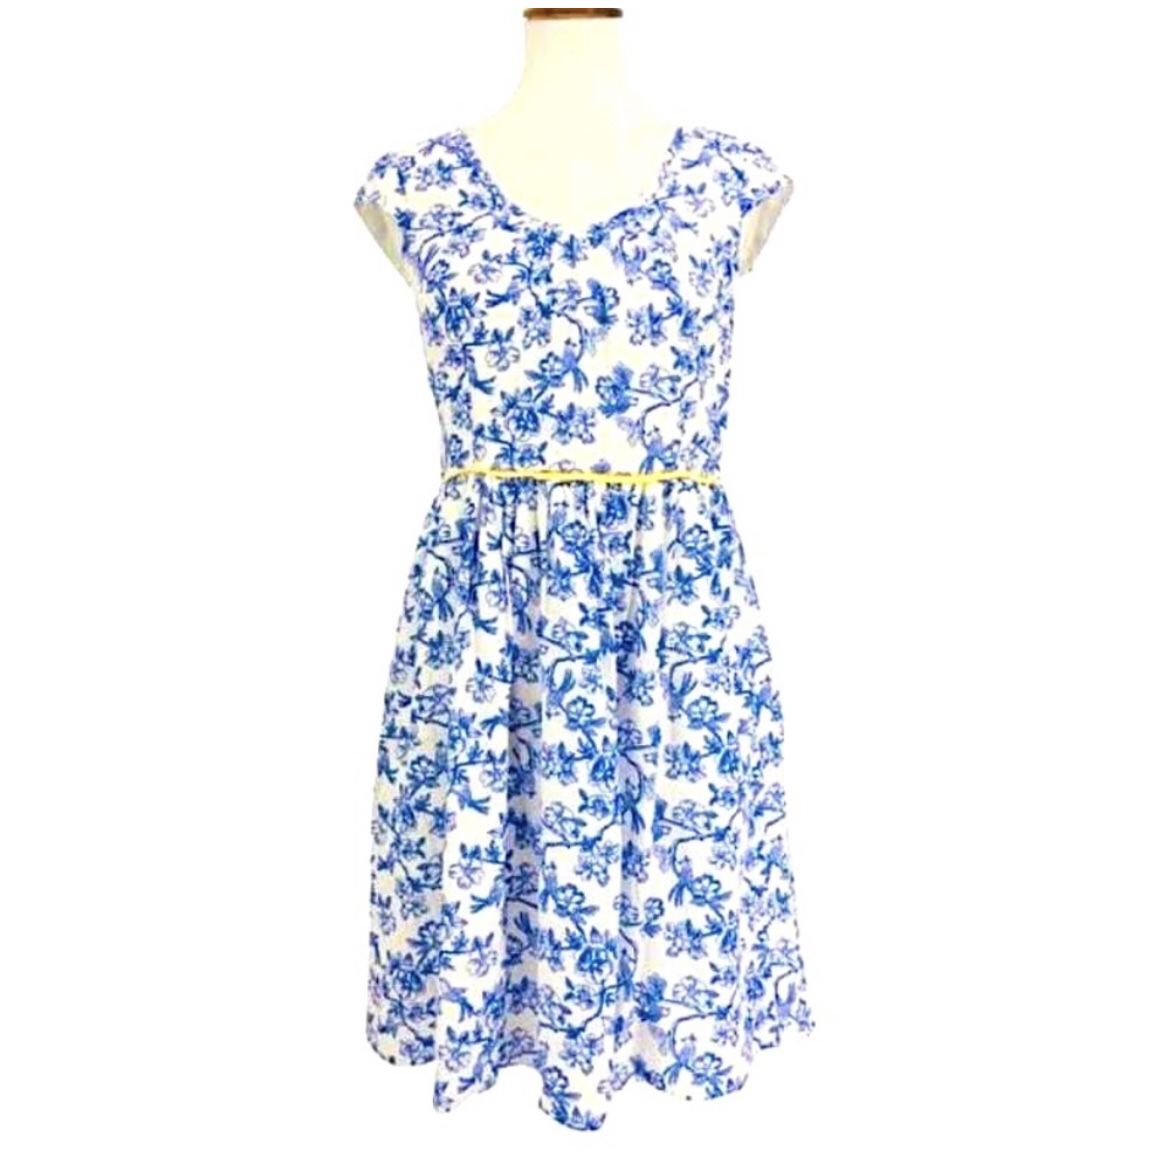 Matilda Jane Bluebell Blue Floral Dress - Size 10